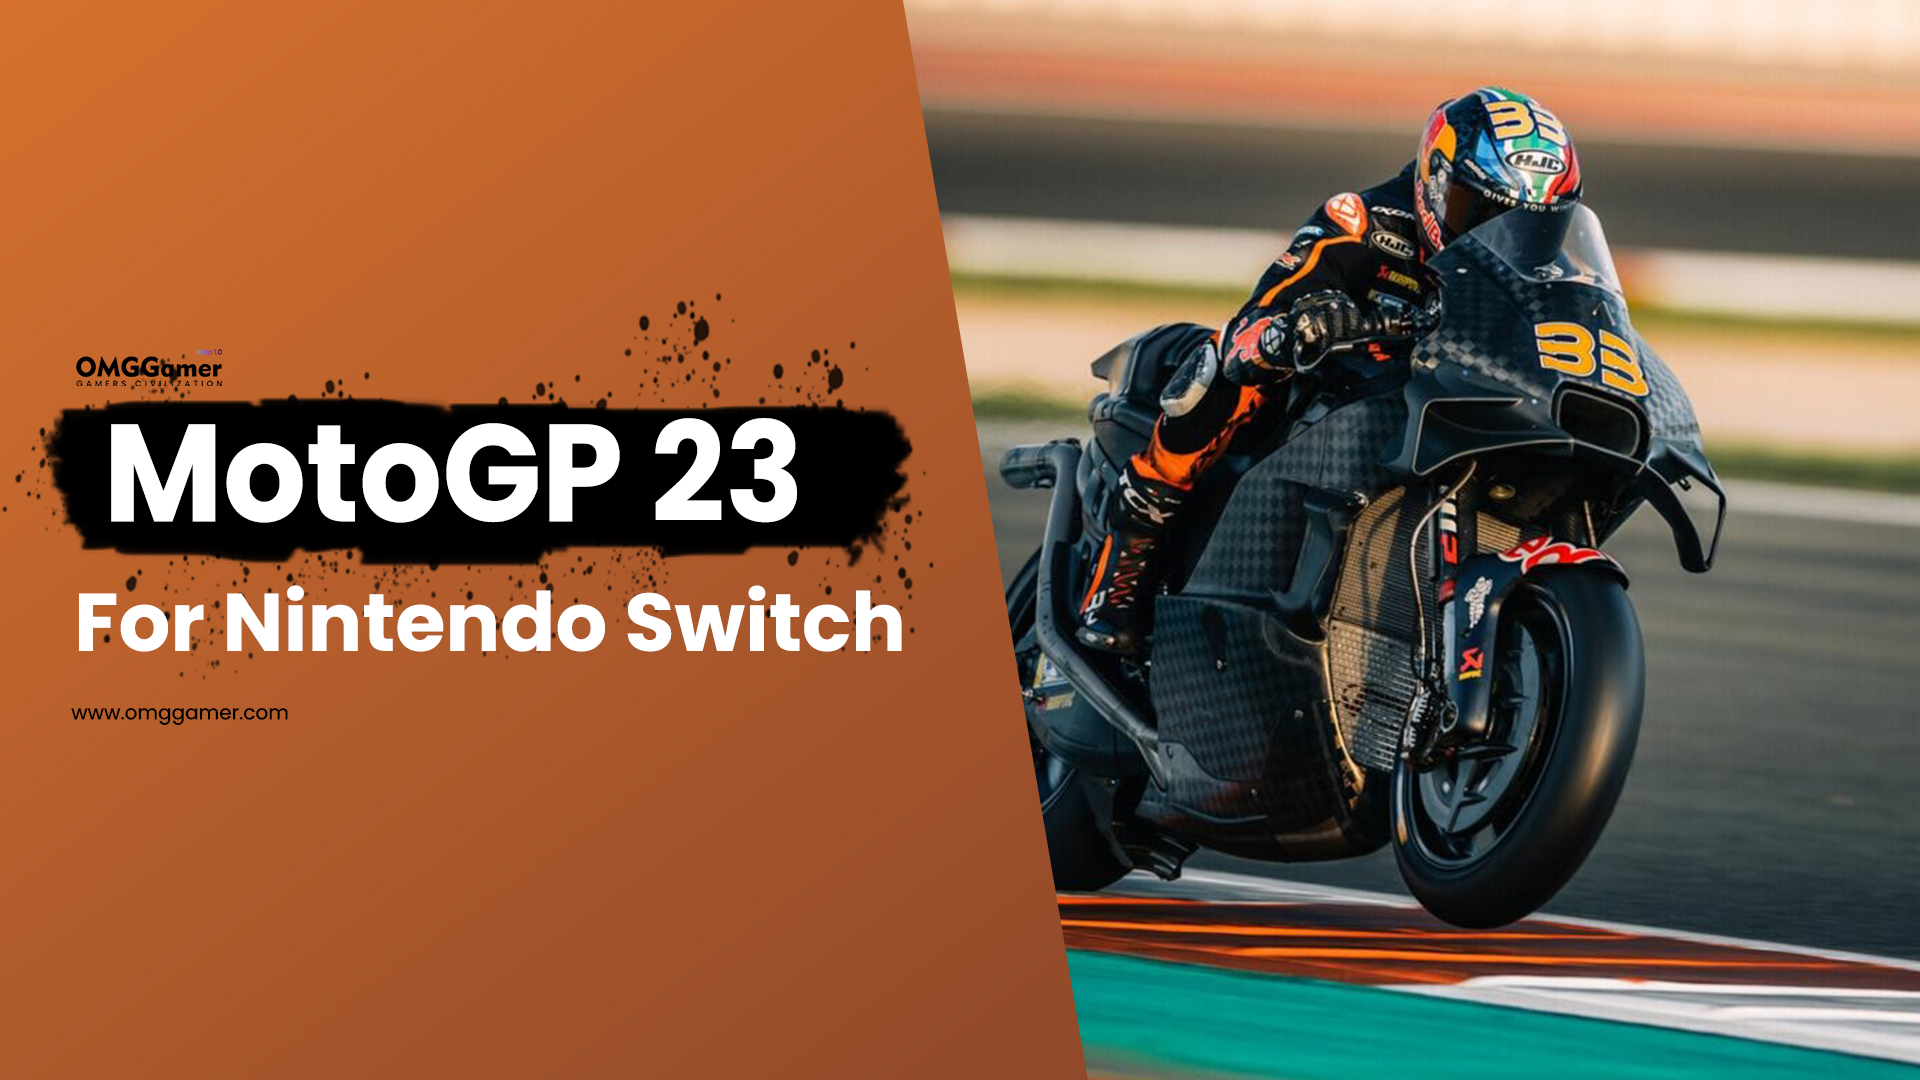 MotoGP 23 for Nintendo Switch